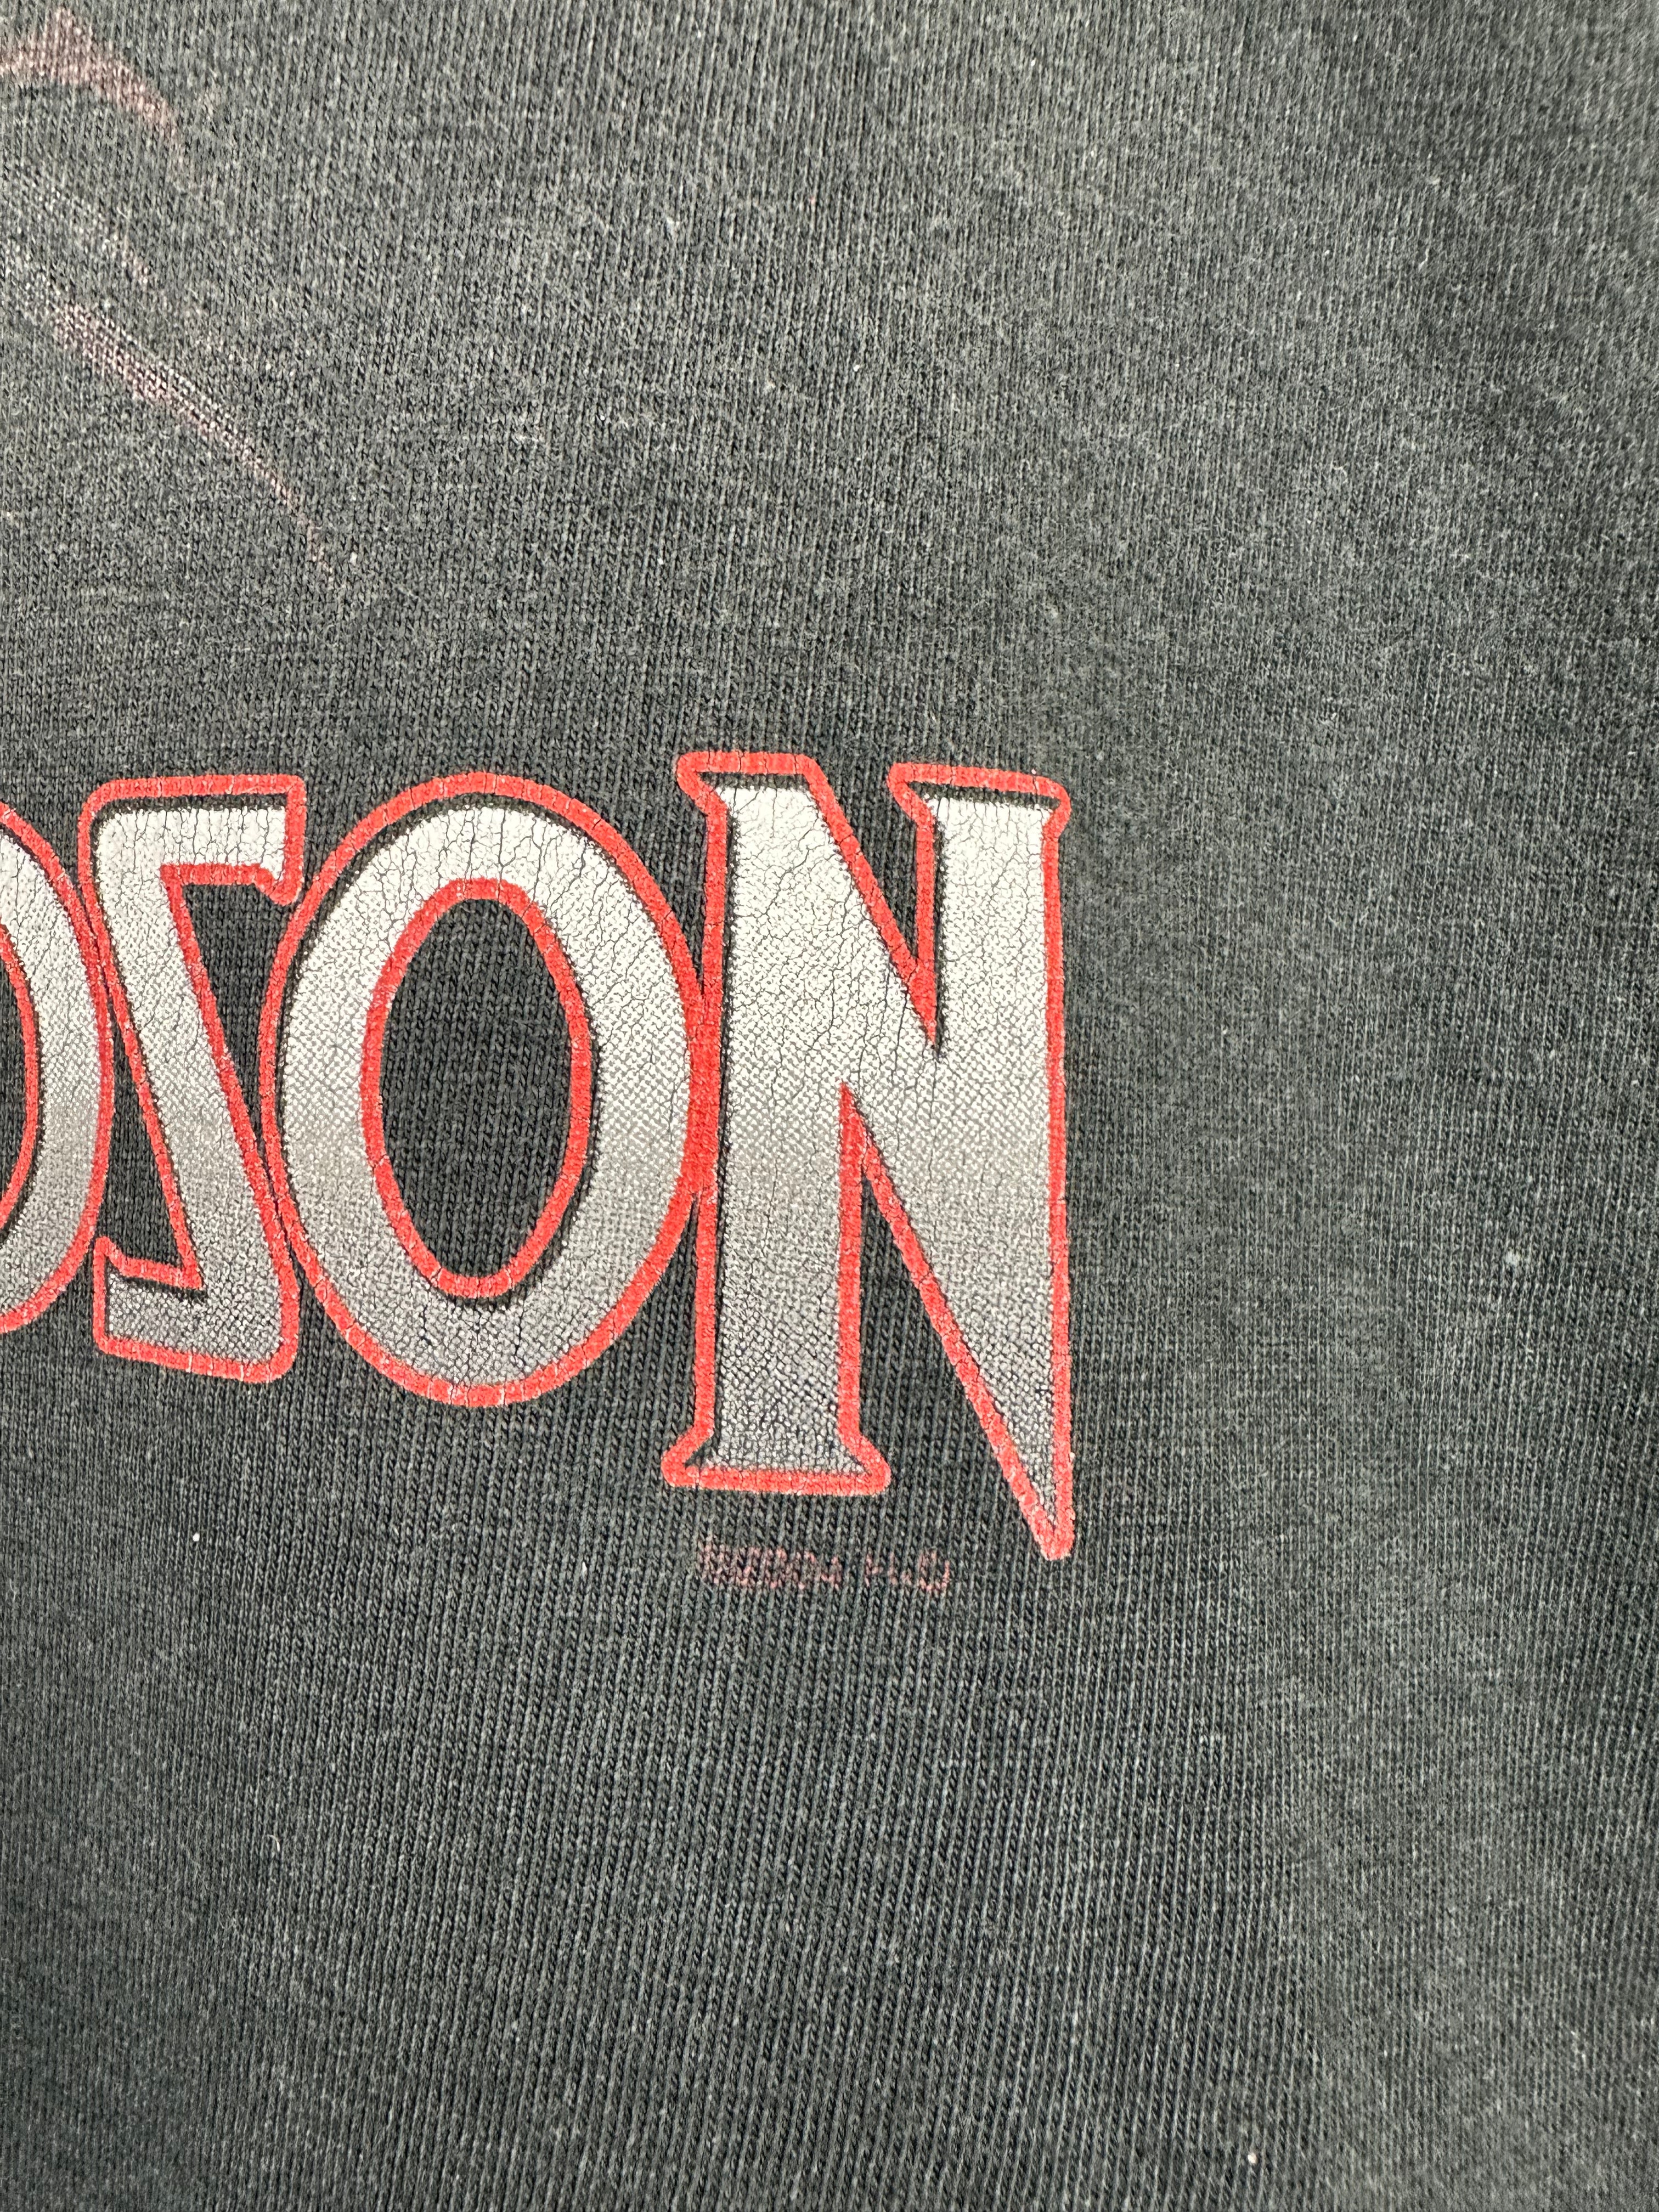 Vintage Harley Davidson Dragon 2004 T-shirt - size L